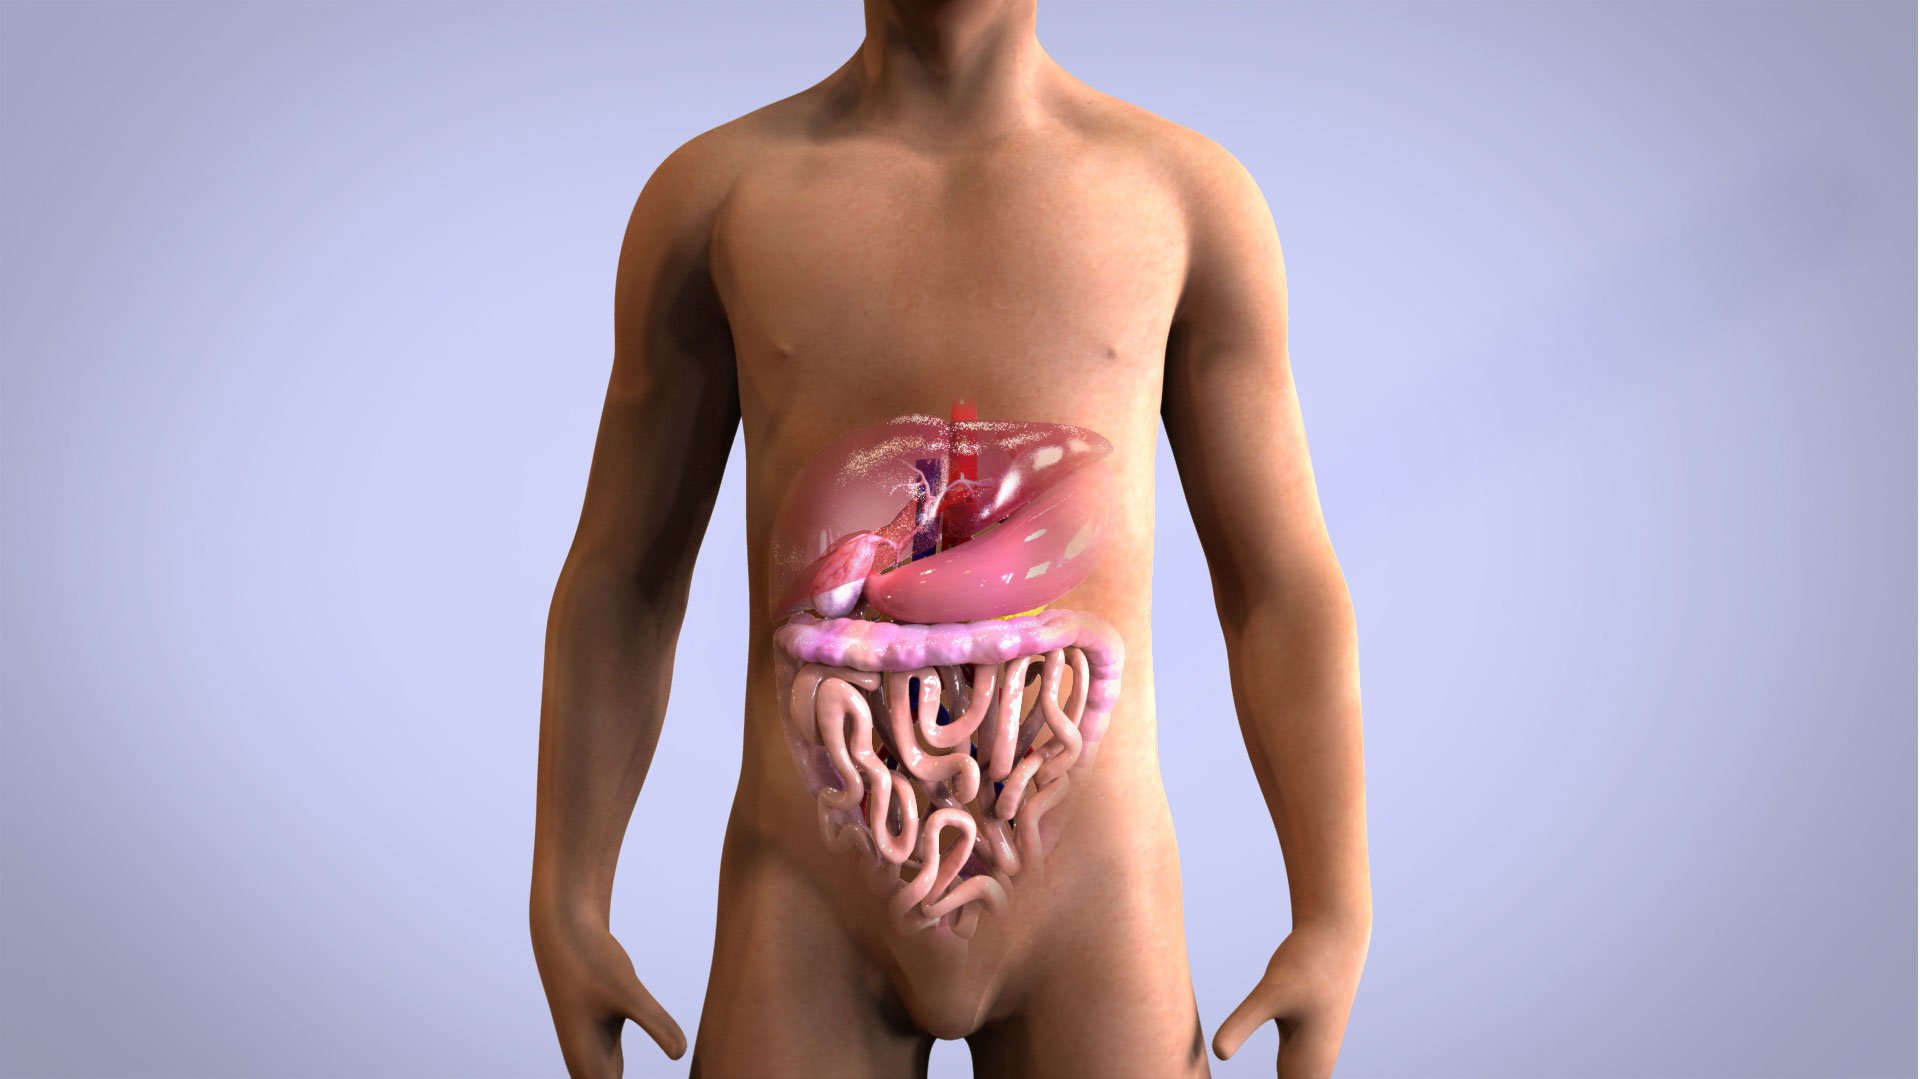 Patient with Internal Organs.jpg